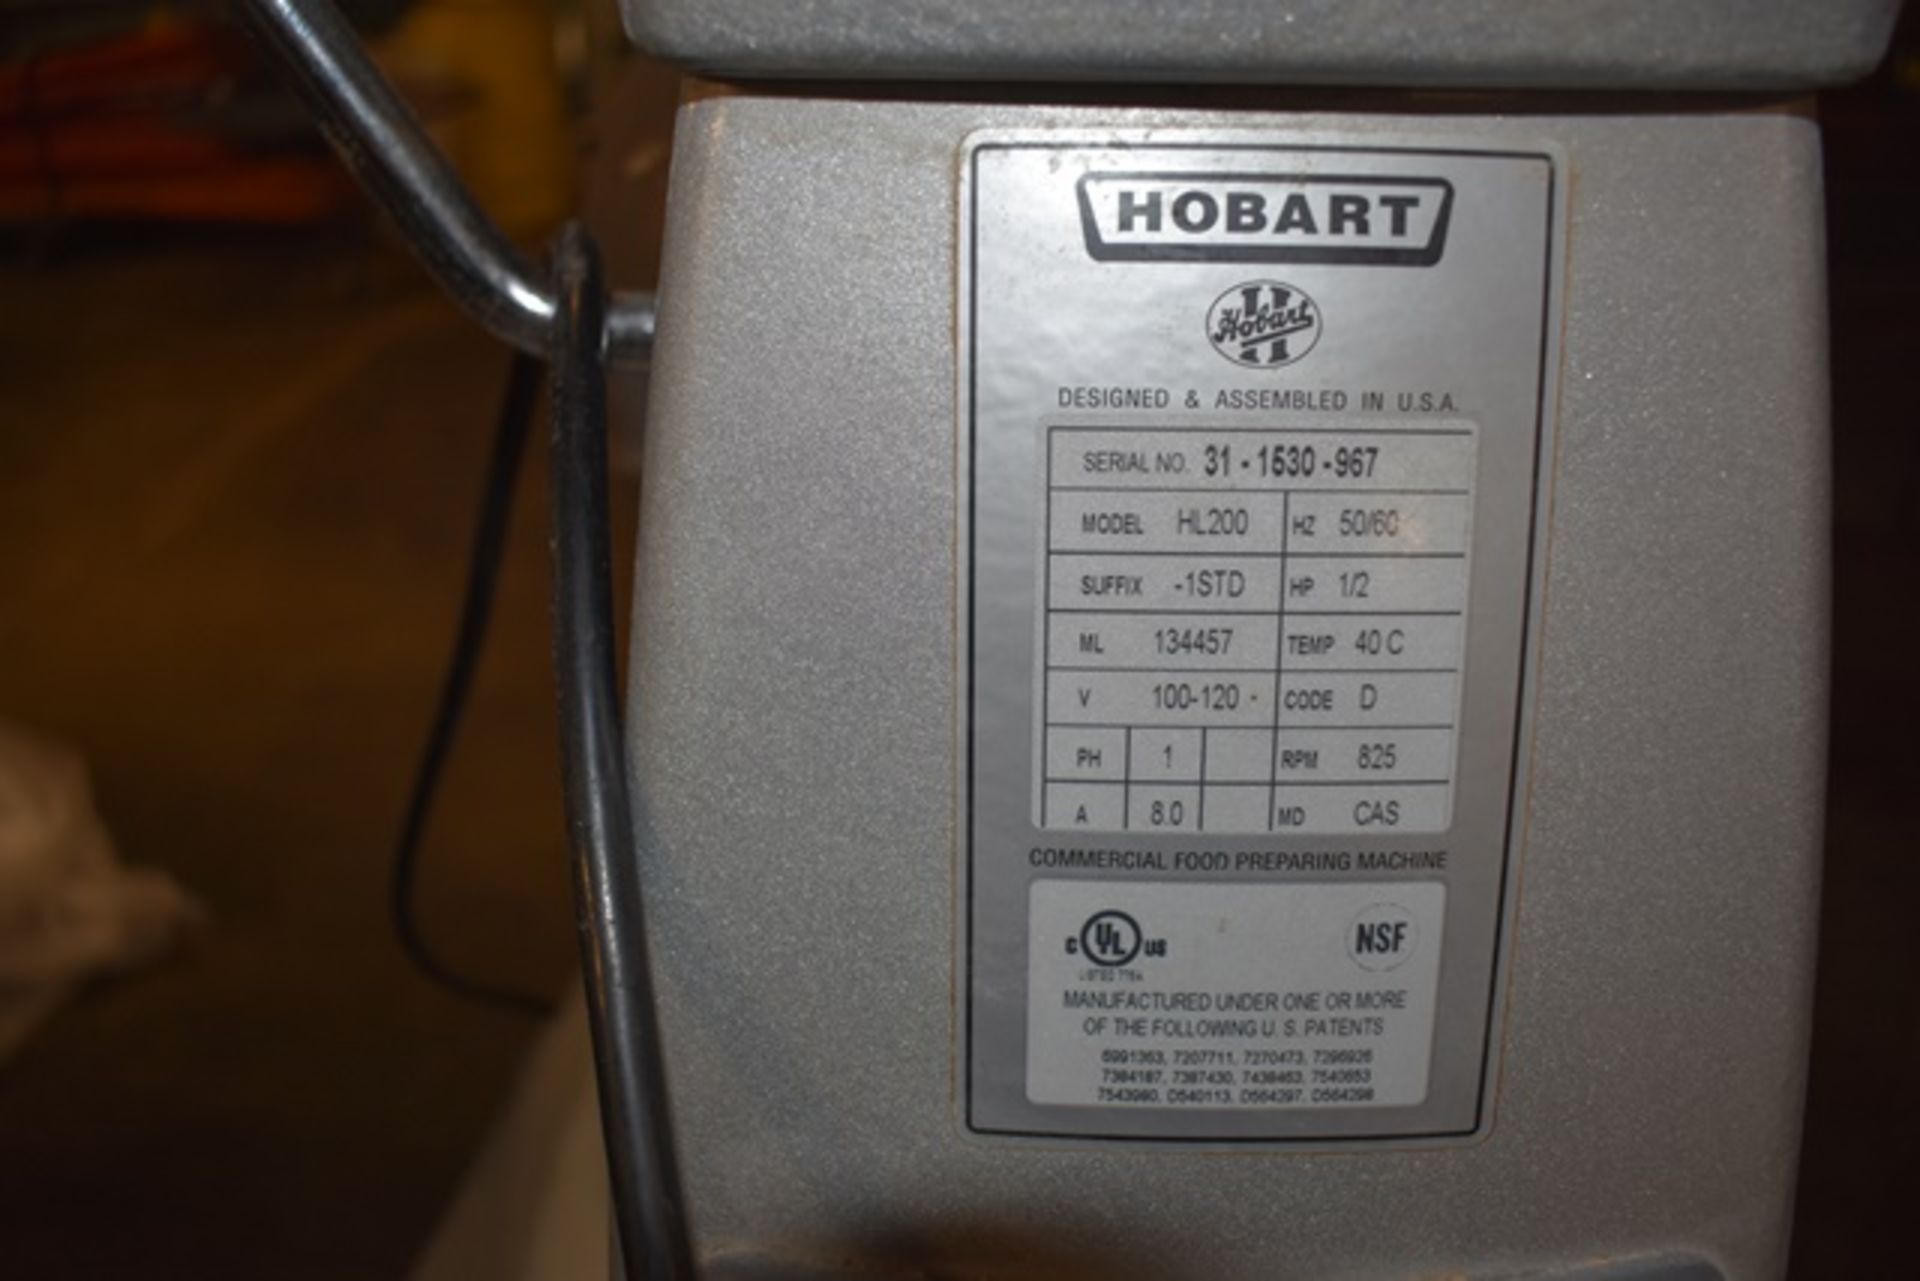 Hobart Model #HL-200 Legacy Mixer, SN 31-1350-967 - Image 2 of 3